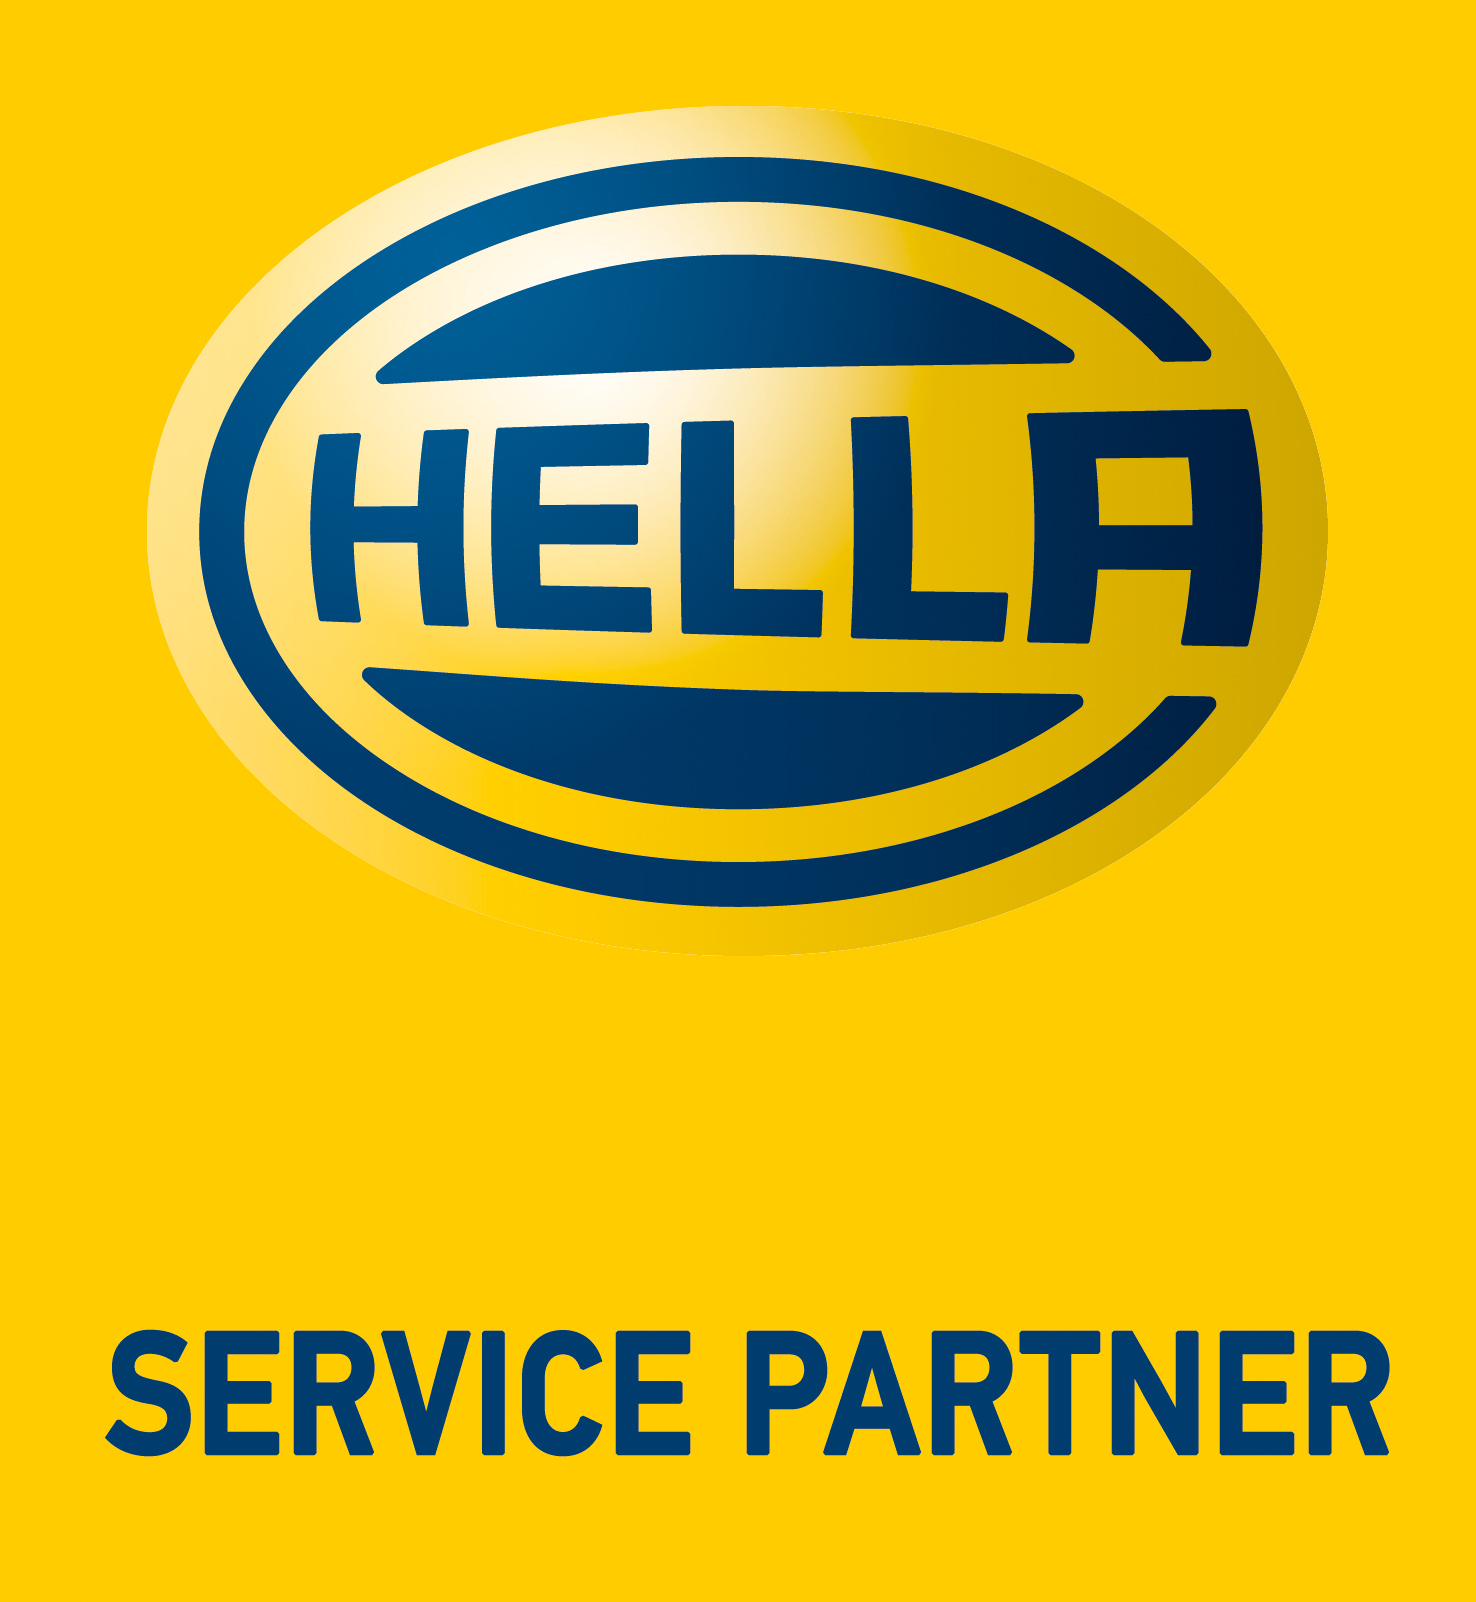 TM Biler & Service - Hella Service Partner logo